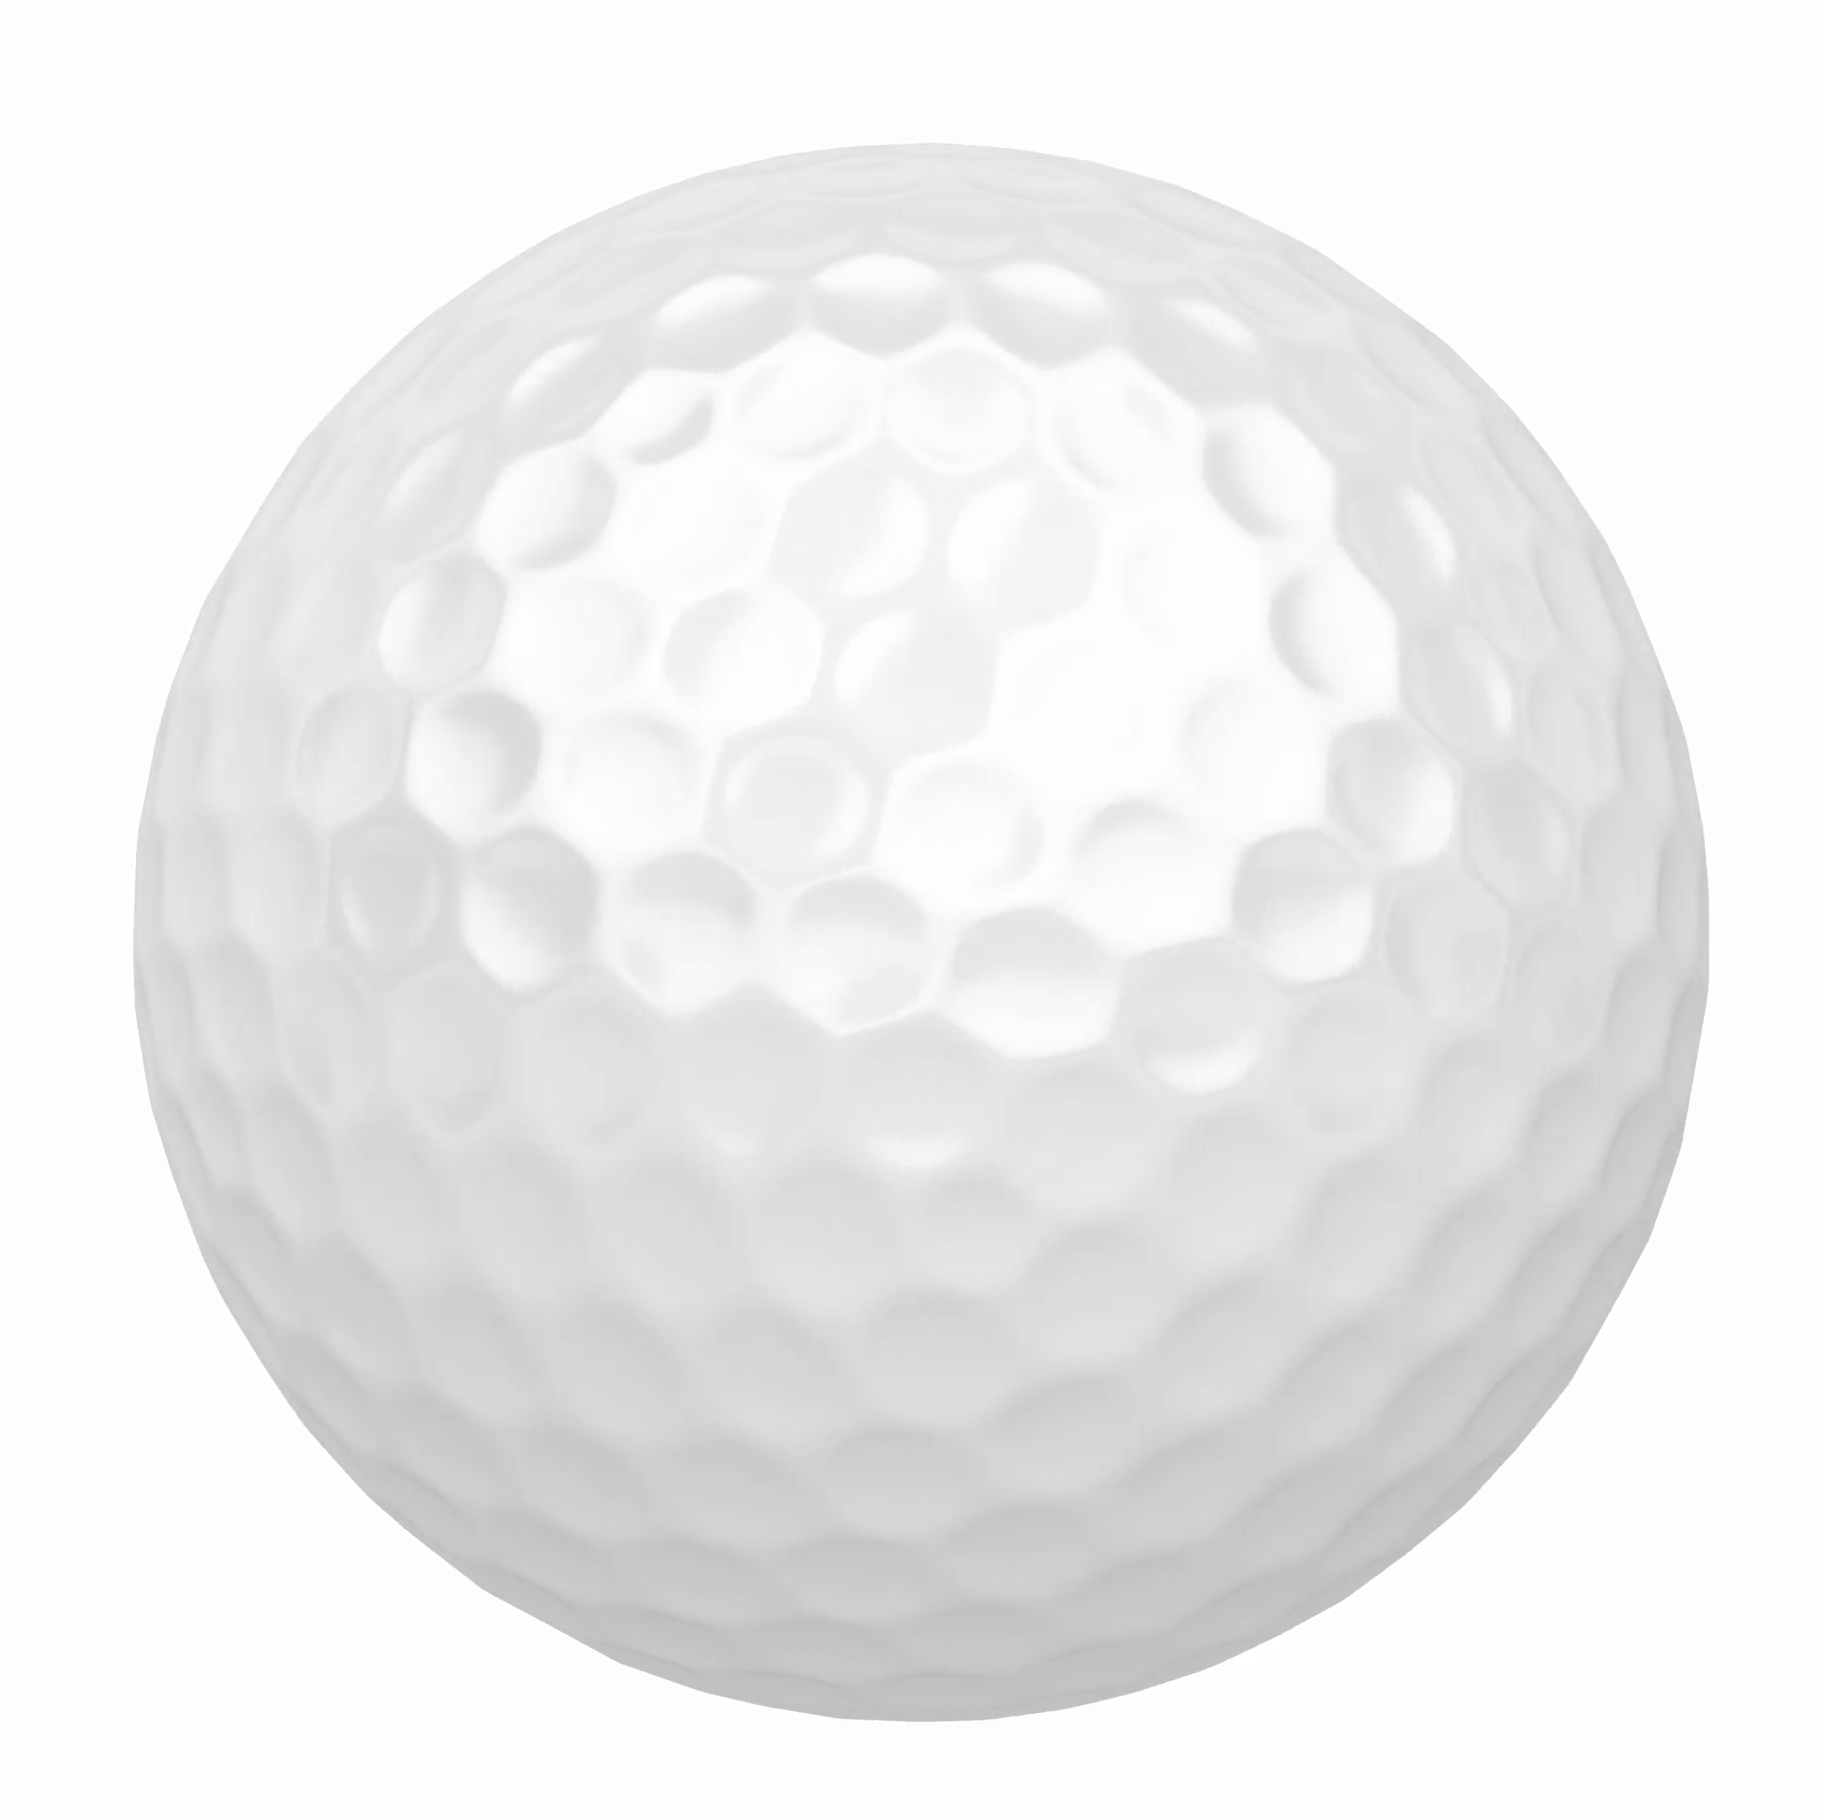 golf-ball-spin-on-white-background_rfgkhki3m__f00001.png